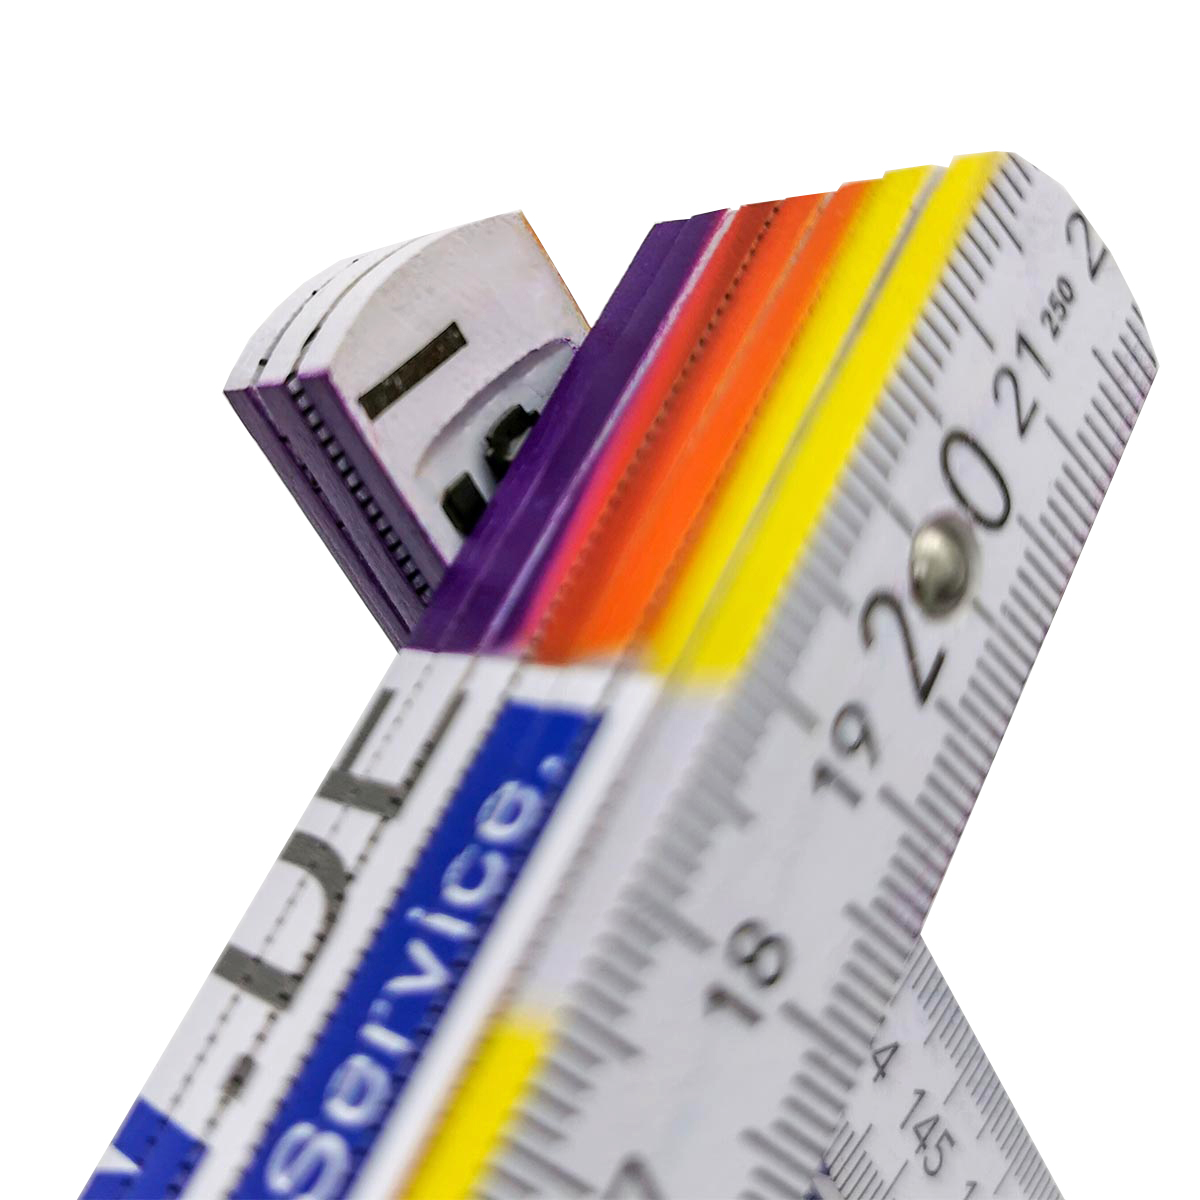 ADGA 250 plus natur - 2m Zollstock Meterstab Gliedermaßstab mit Druck Fotodruck 4-farbig